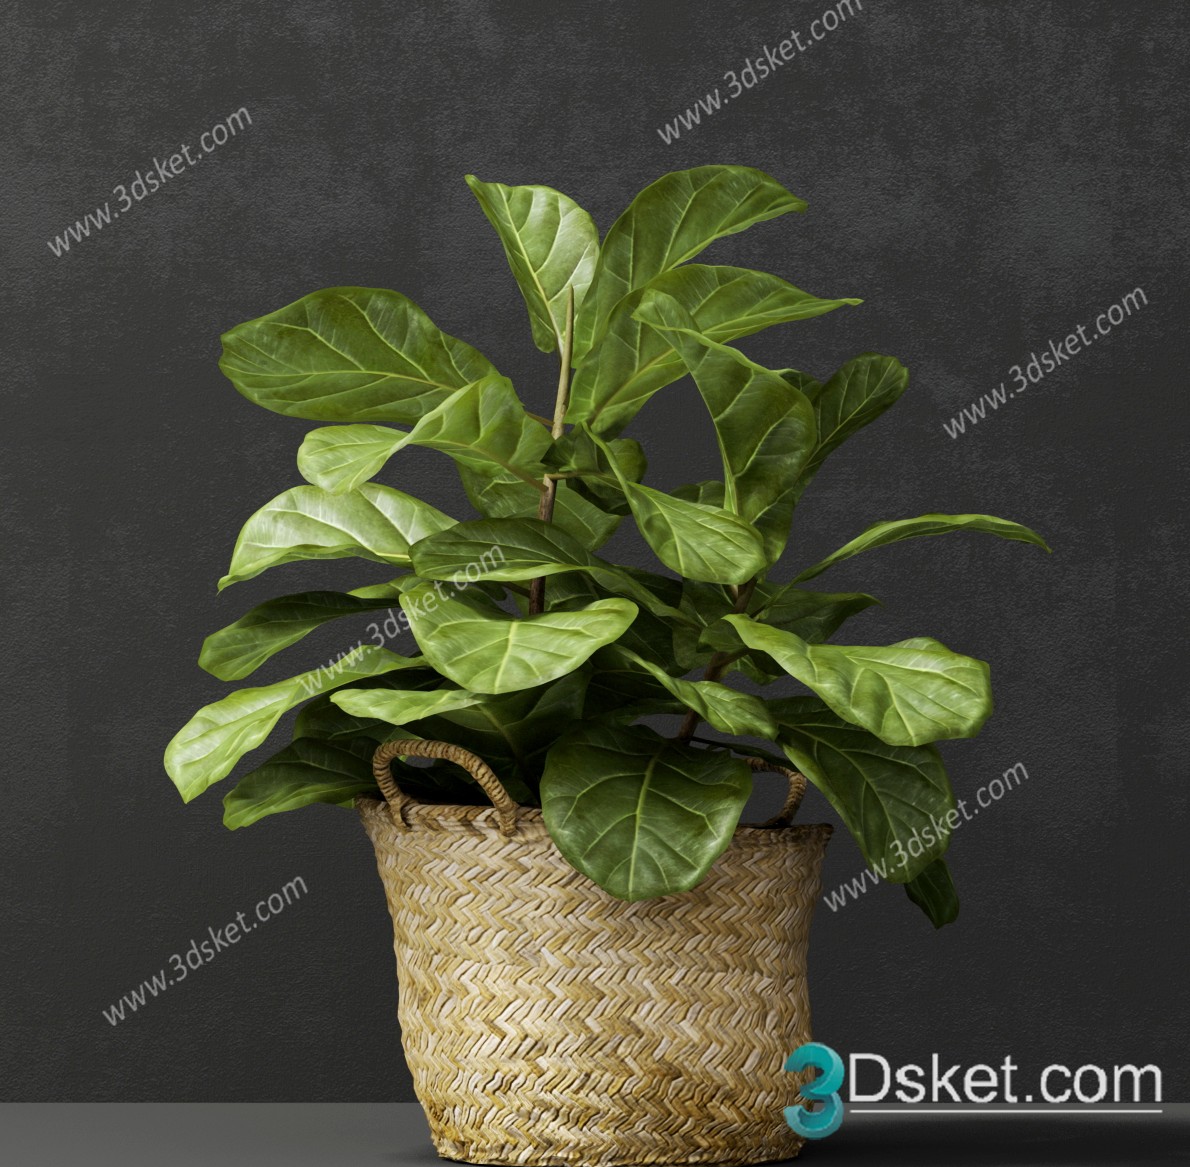 https://3dsket.com/plant/indoor-plants/